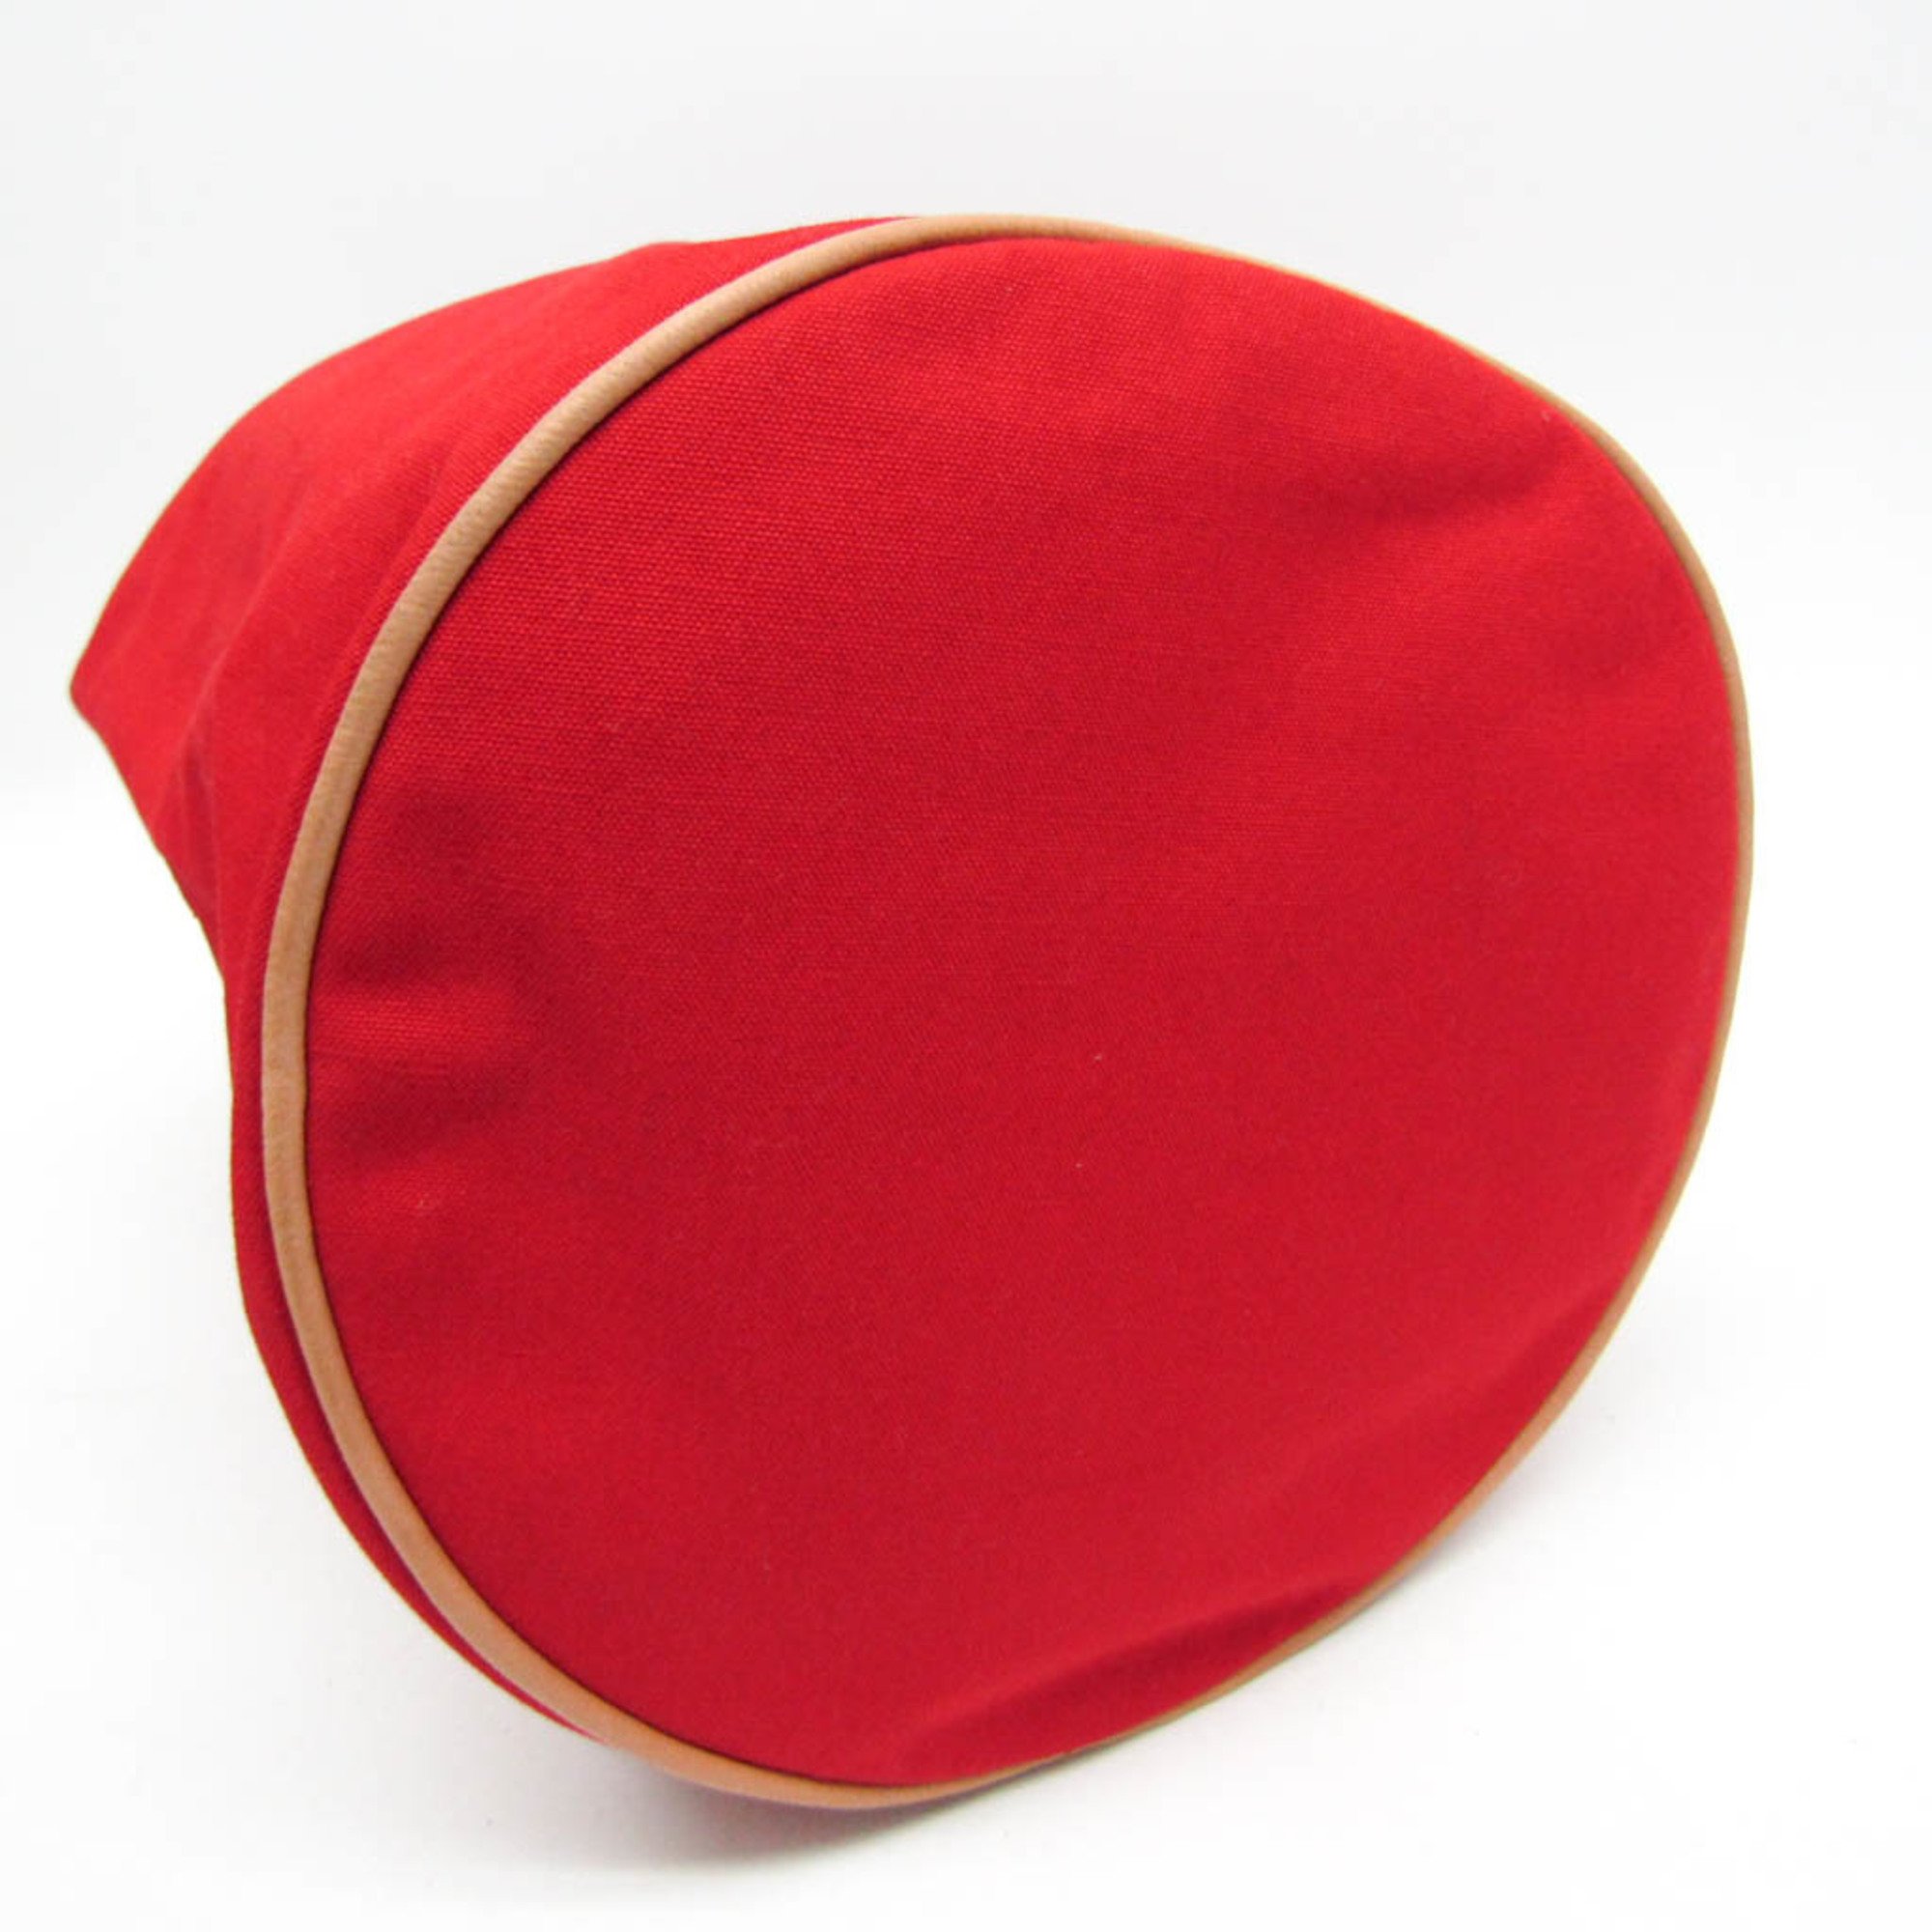 Hermes Polochon Mimil GM Women's Cotton,Leather Backpack,Shoulder Bag Brown,Red Color